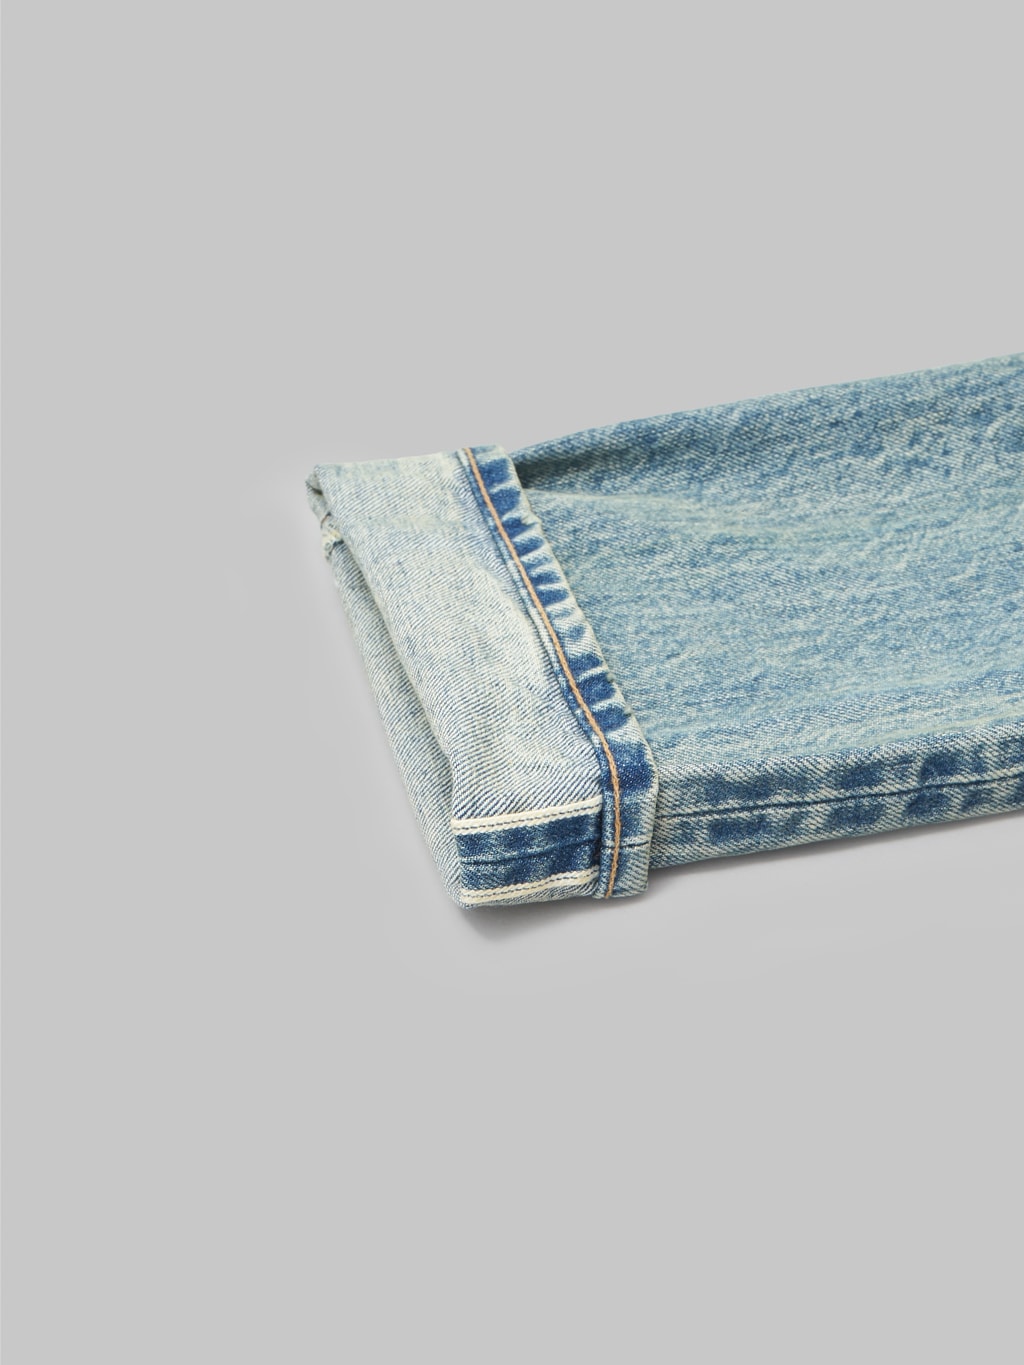 rogue territory strider light indigo wash selvedge jeans interior fabric